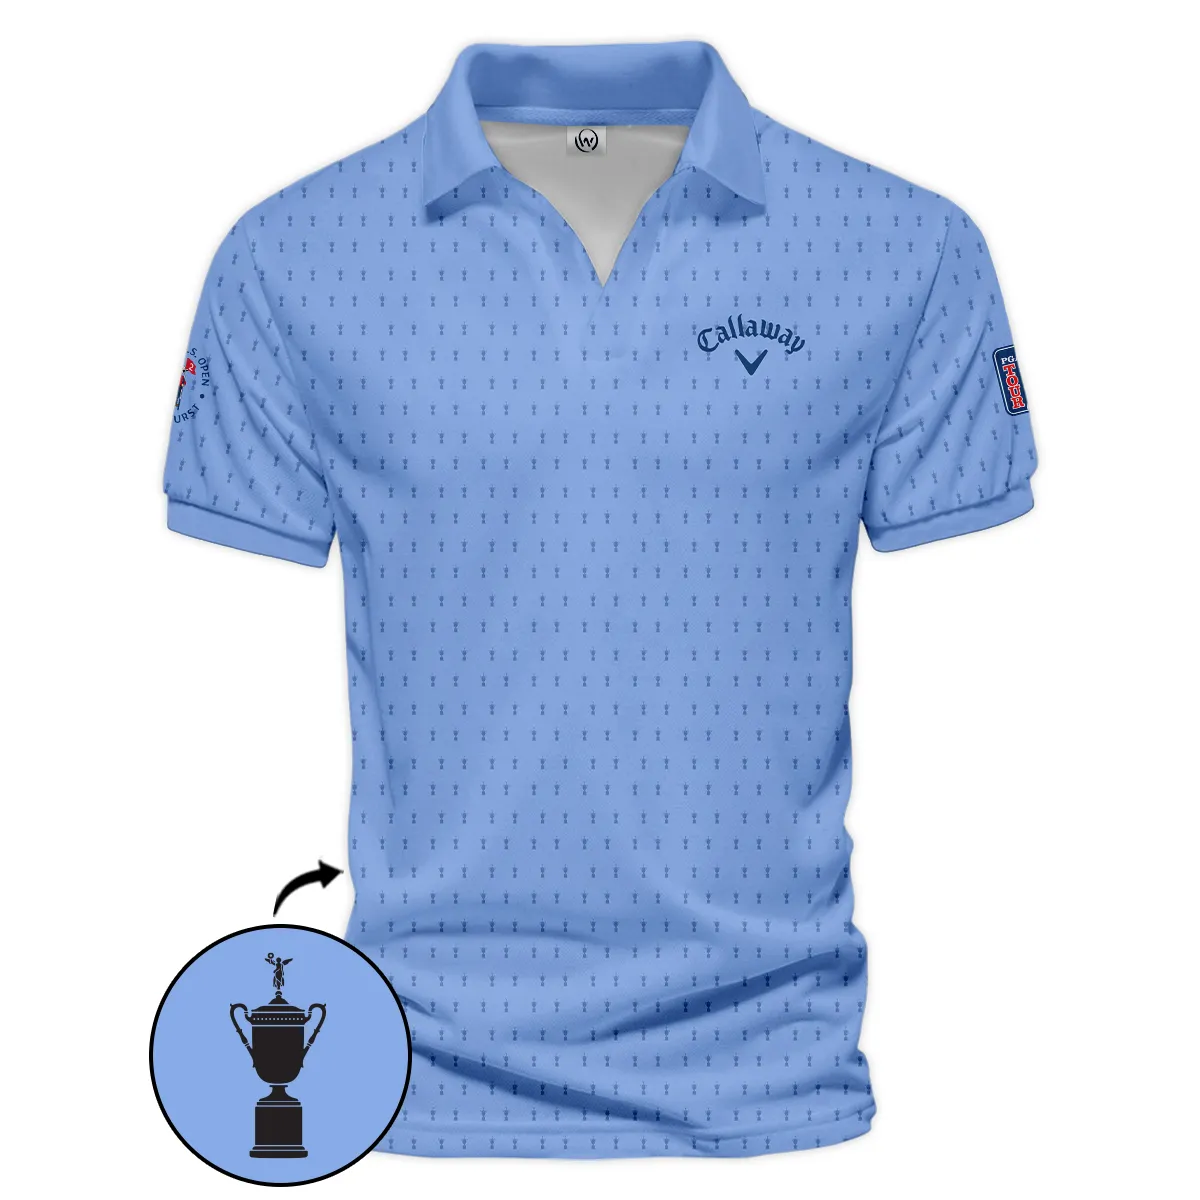 Golf Pattern Cup Blue 124th U.S. Open Pinehurst Pinehurst Callaway Quarter-Zip Jacket Style Classic